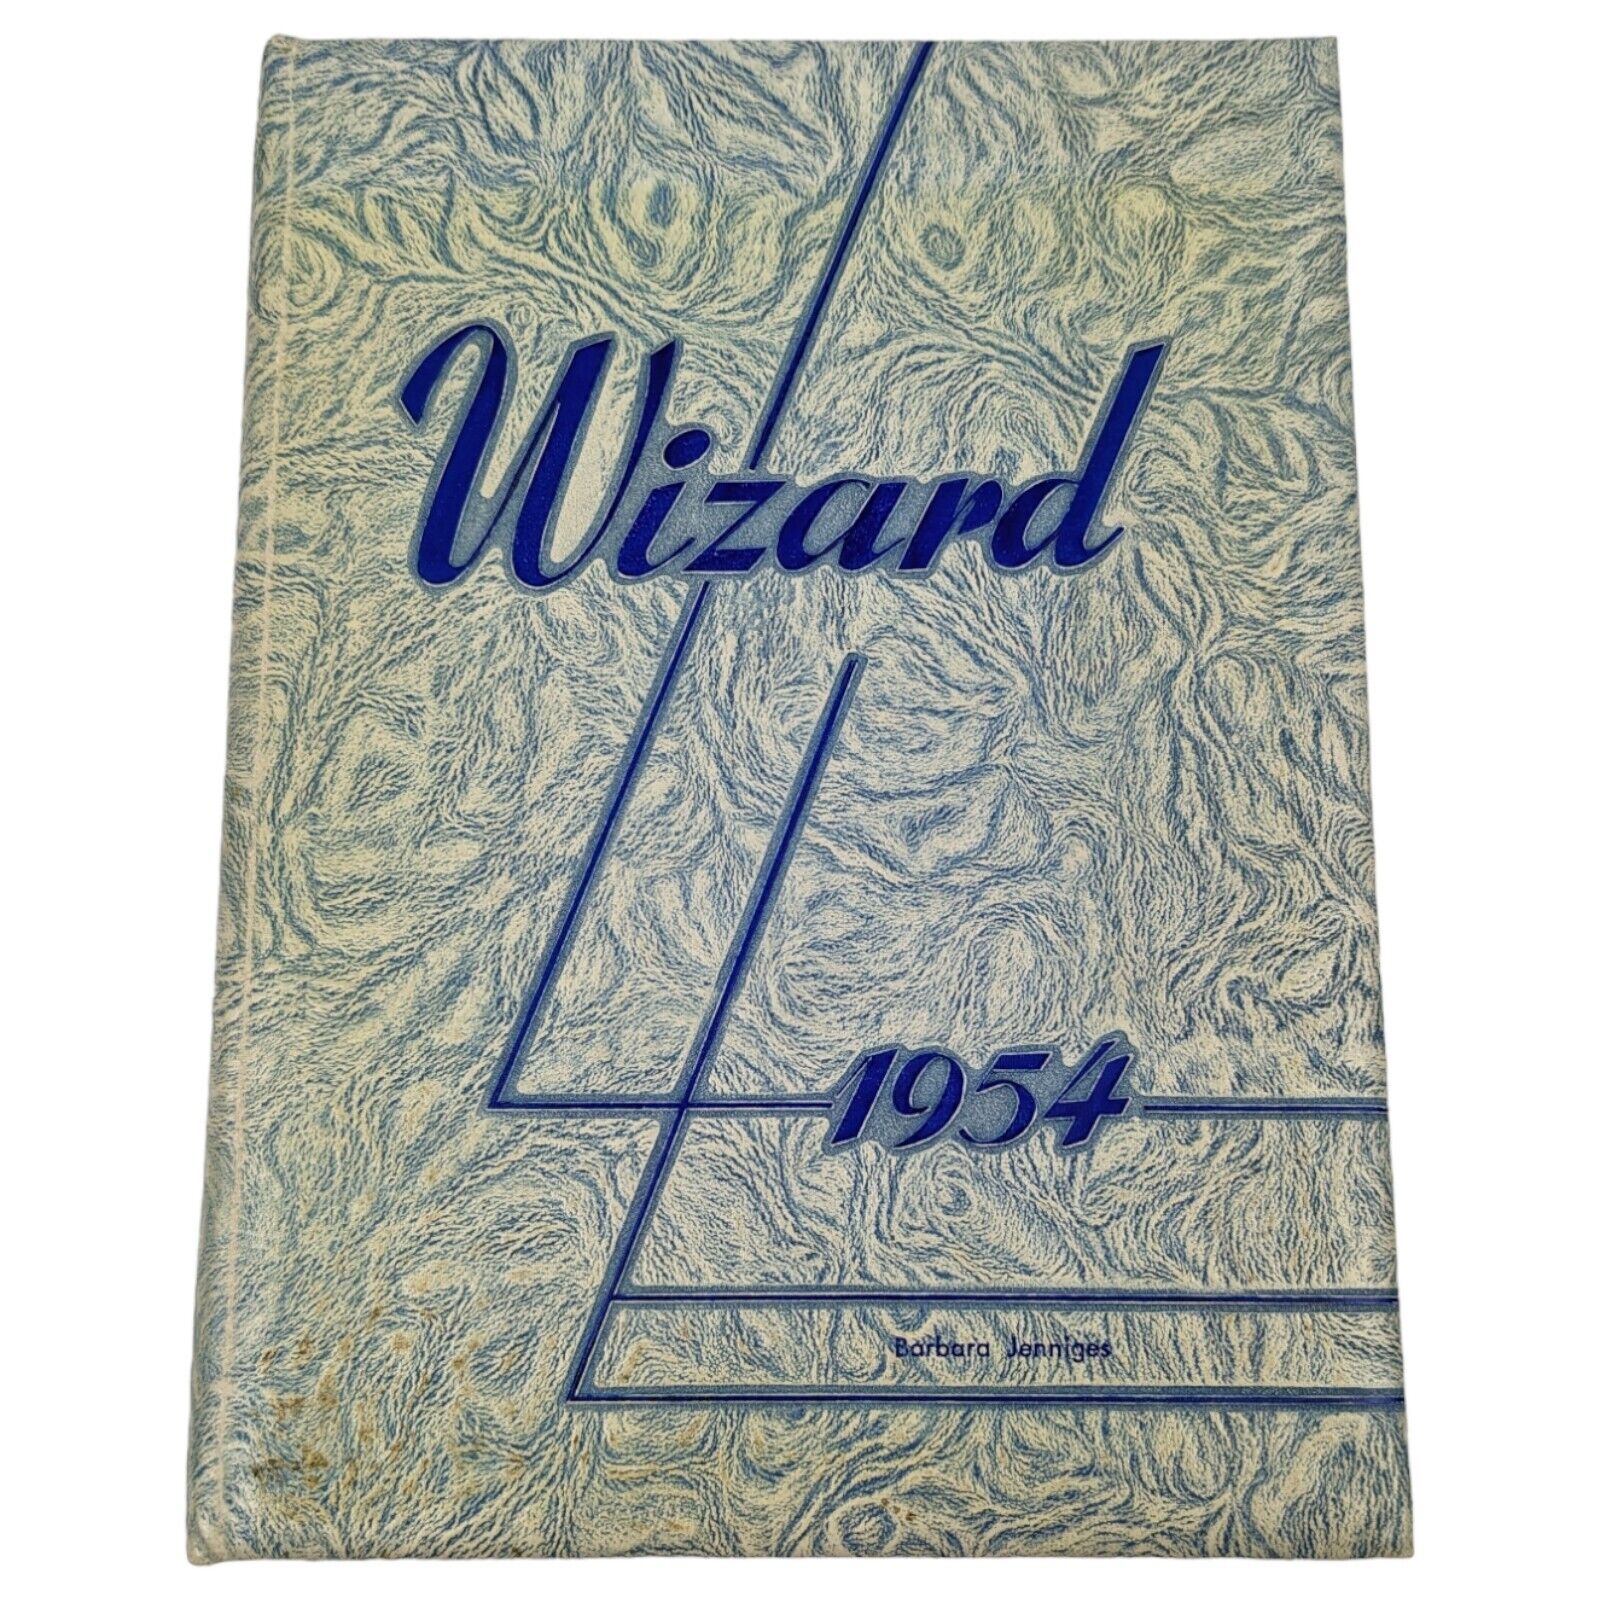 Edison High School (Wizard) Annual Yearbook 1954 - Minneapolis, Minnesota